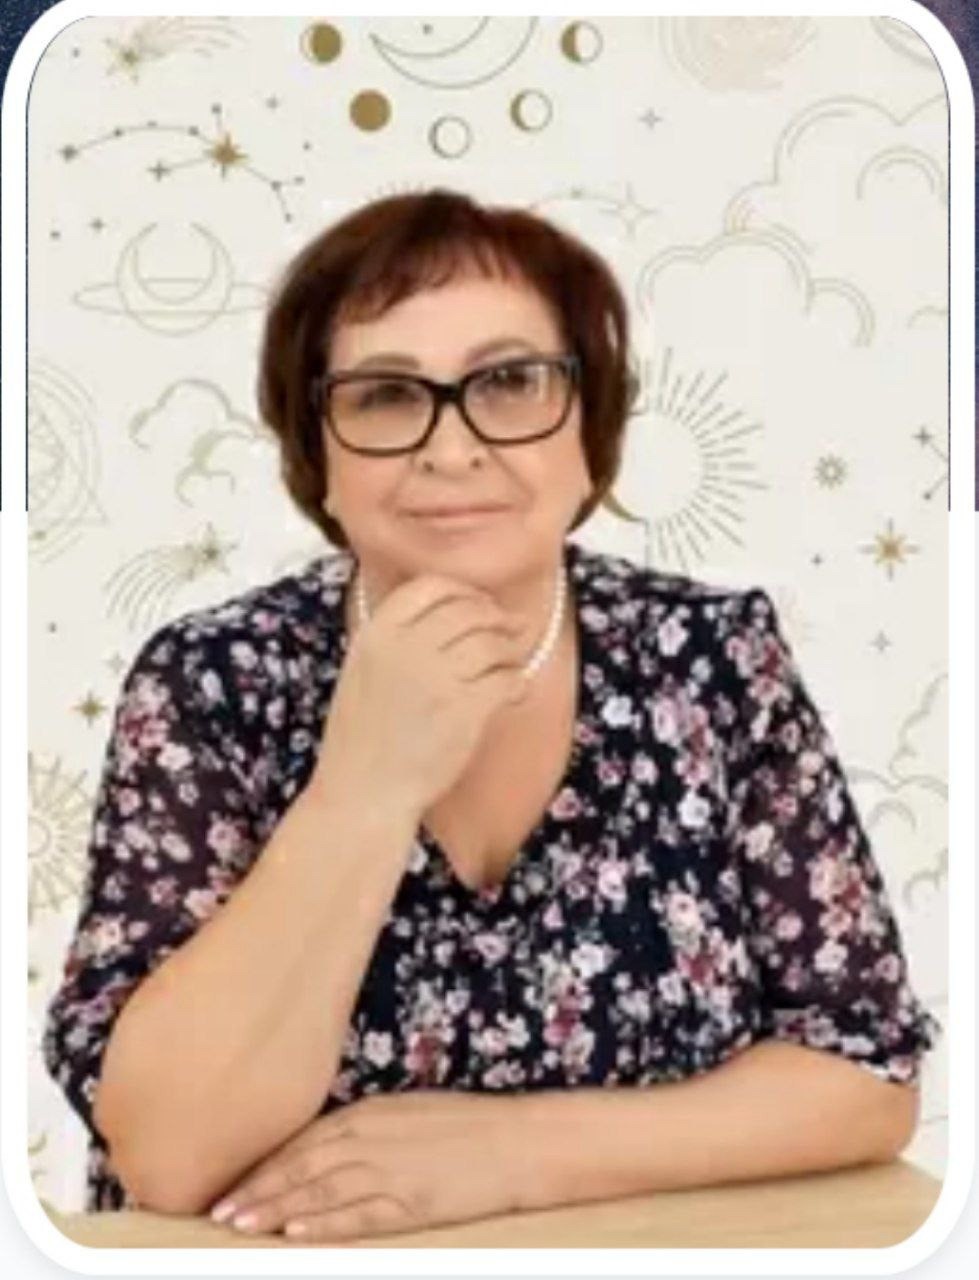 Астролог Ирма Карловна